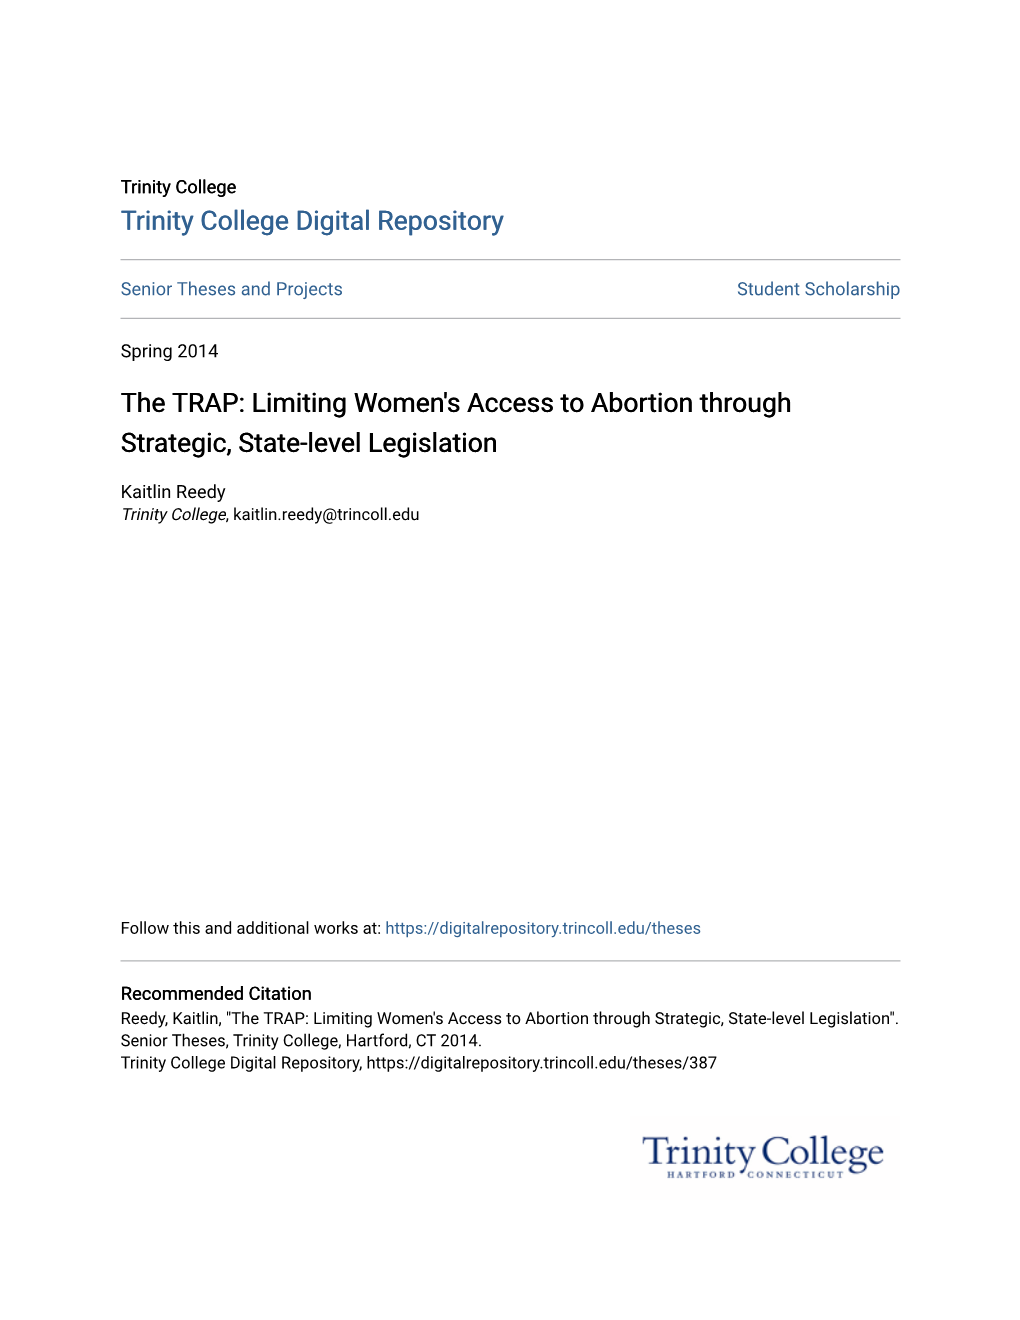 Limiting Women's Access to Abortion Through Strategic, State-Level Legislation